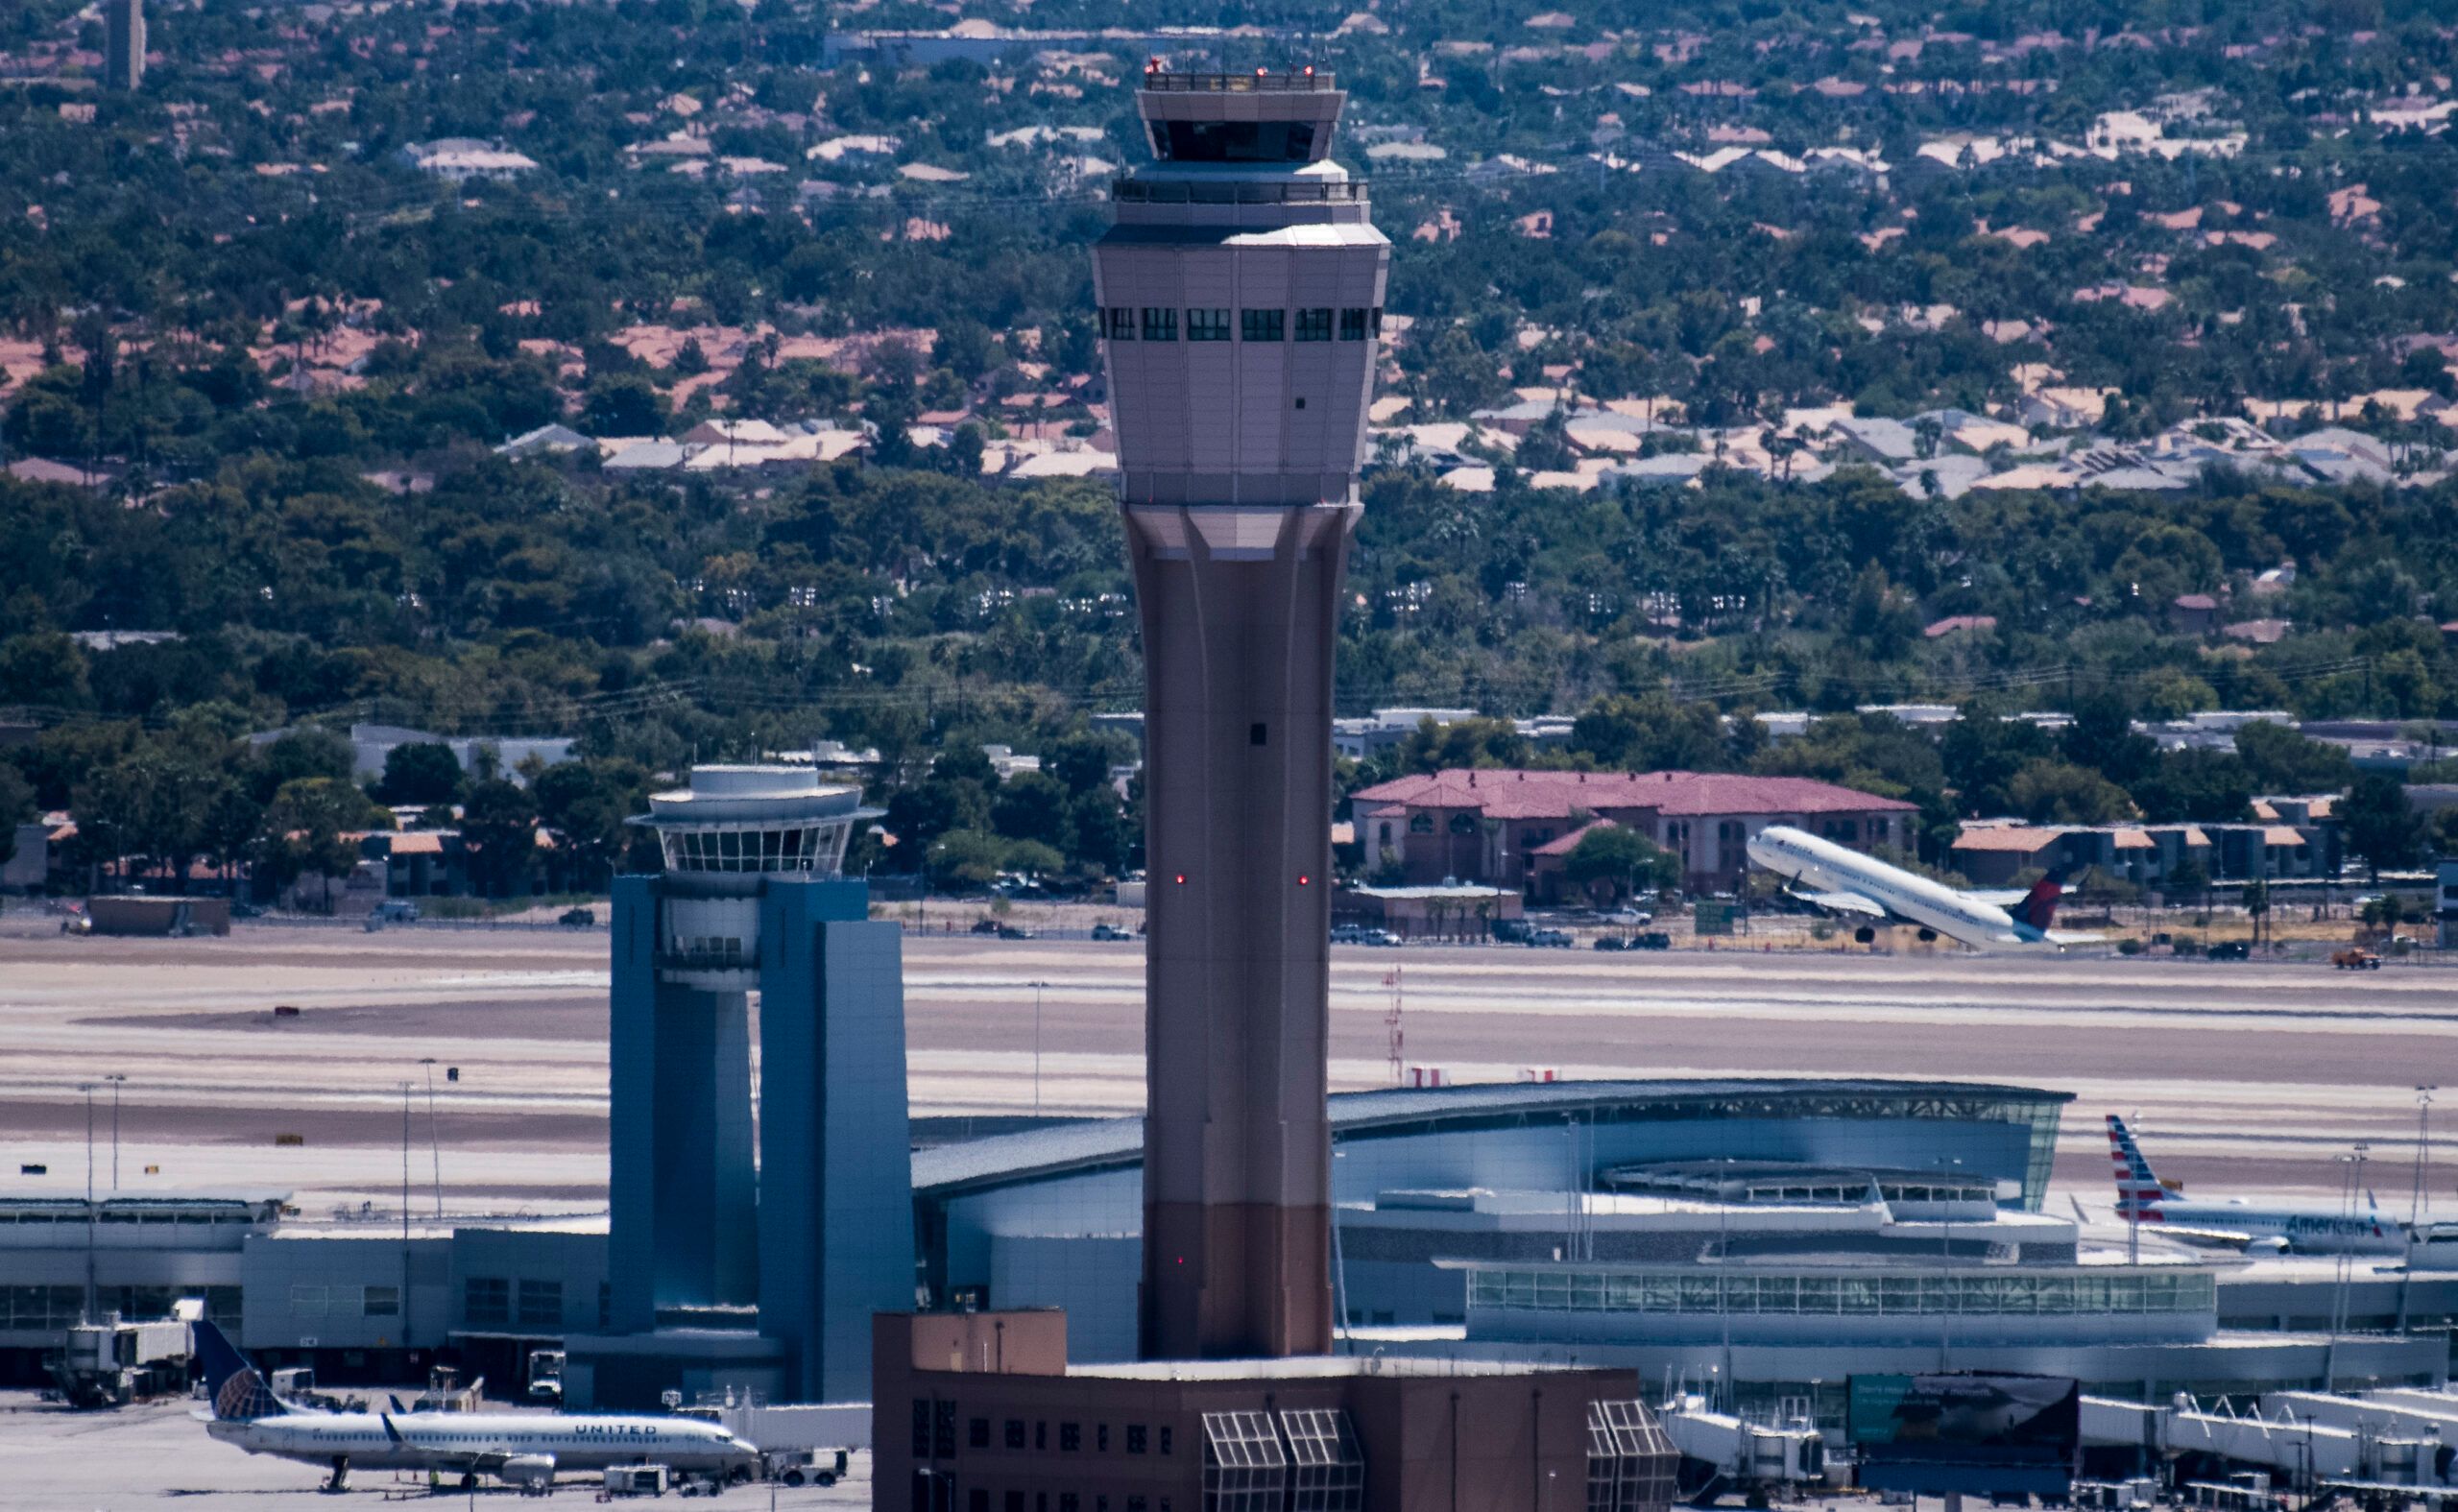 visit air traffic control tower